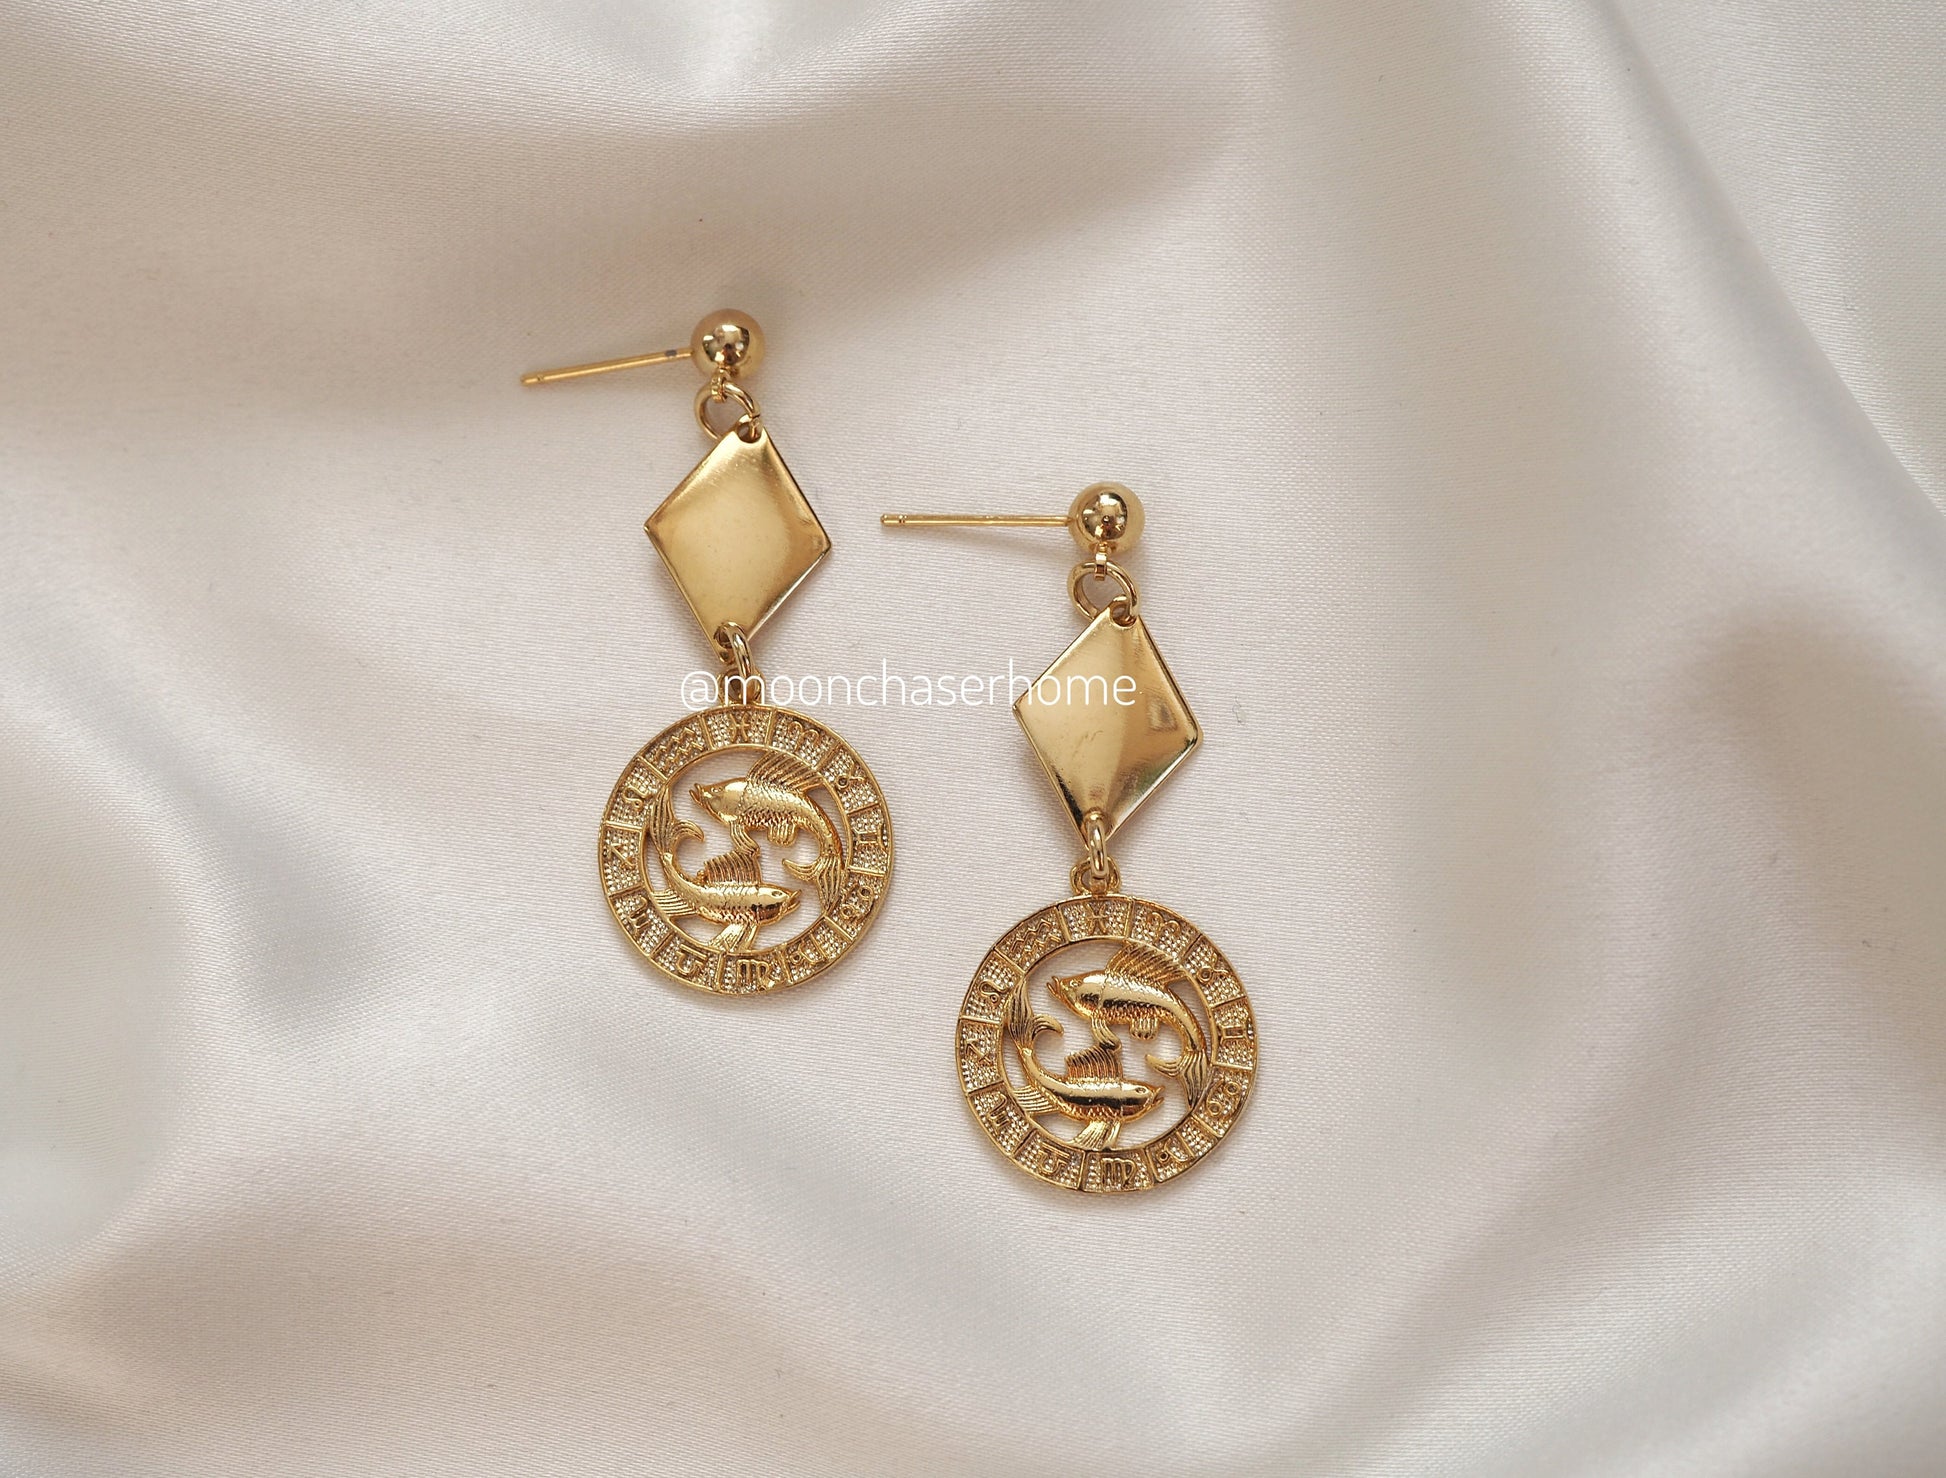 Zodiac earrings -Birthday gift-18K Gold Plated earrings,horoscope earrings, boheman jewelry,gift for woman,gift for her, gold jewelry